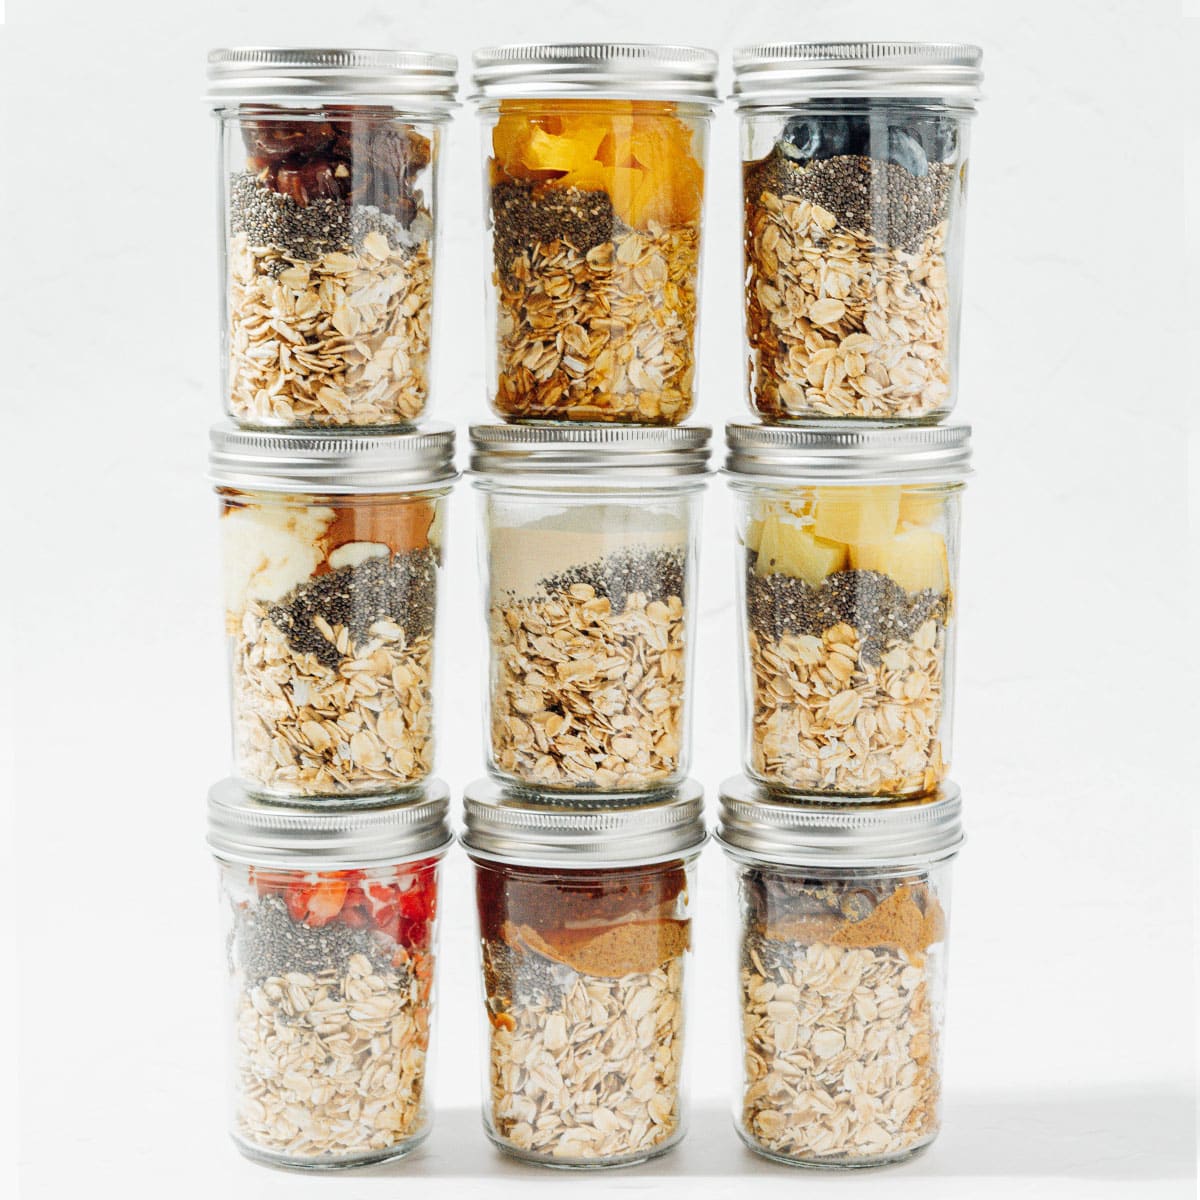 5 easy make ahead oat jars to meal prep breakfast - Cook Eat Live Love